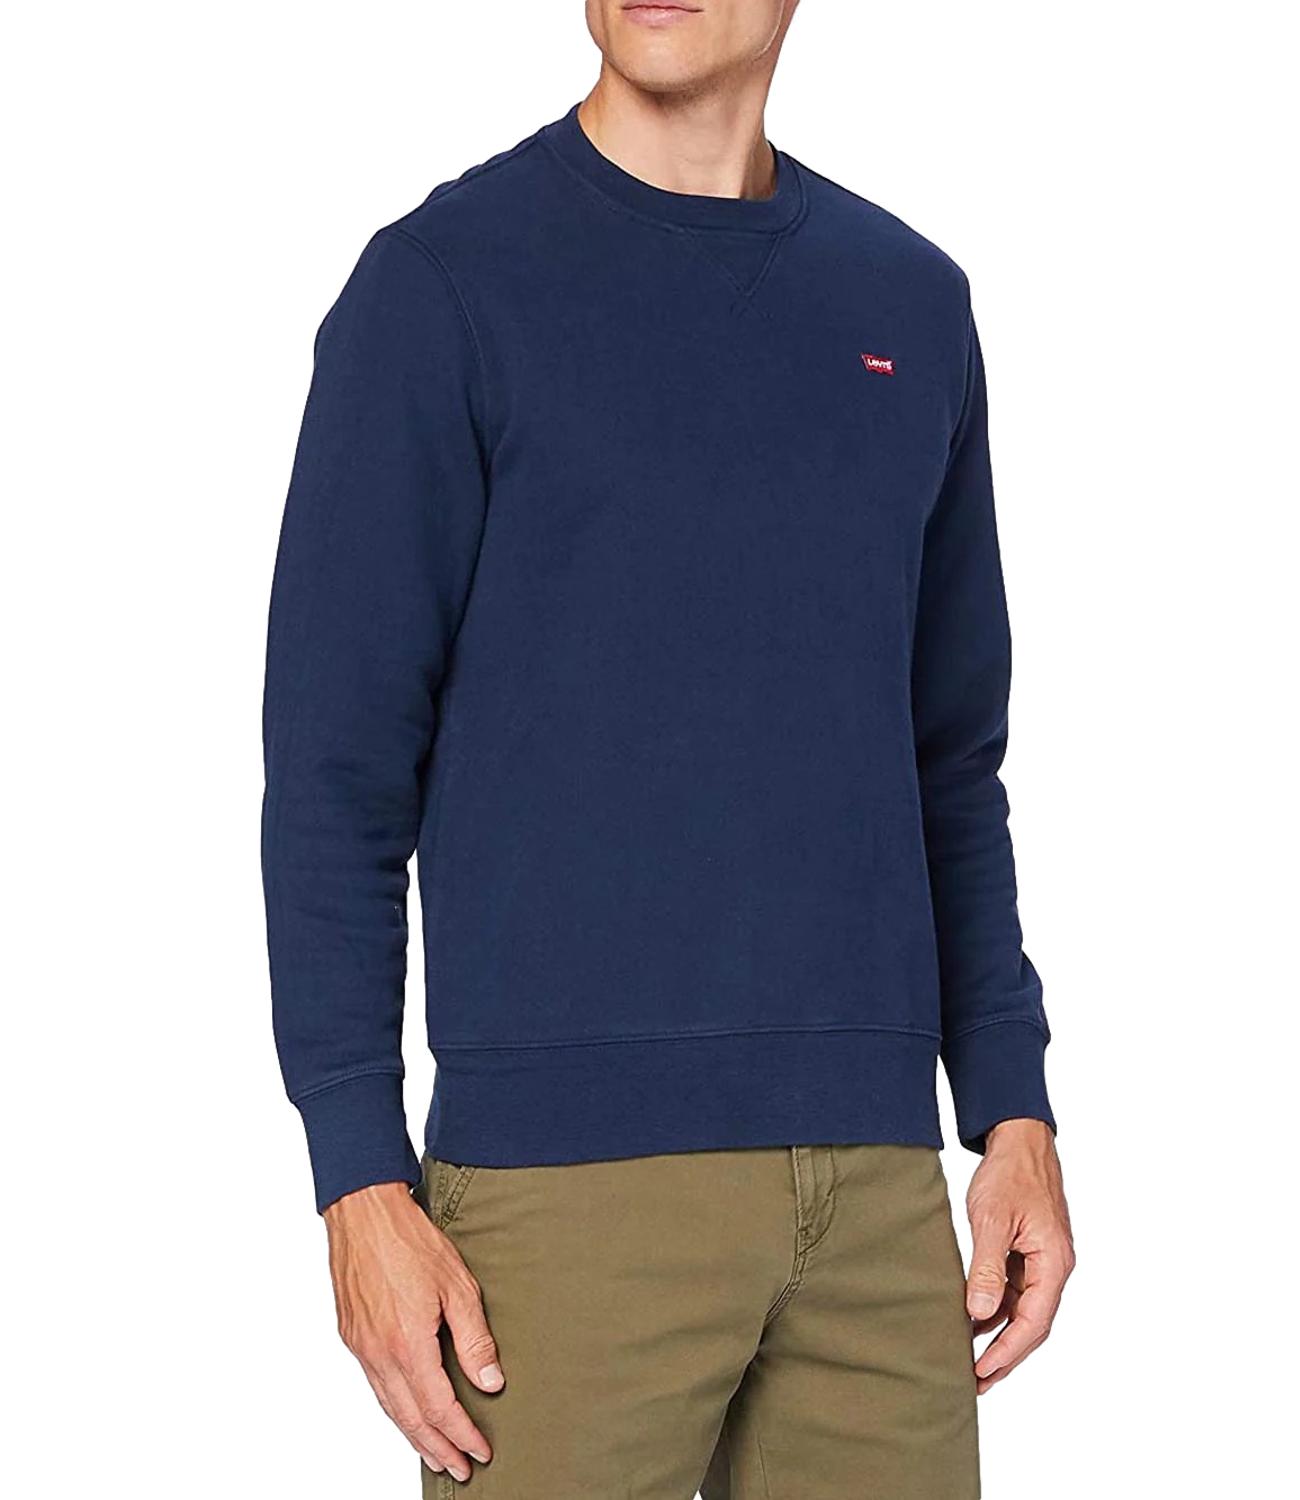 Levis Men's blue brushed crewneck sweatshirt with small logo